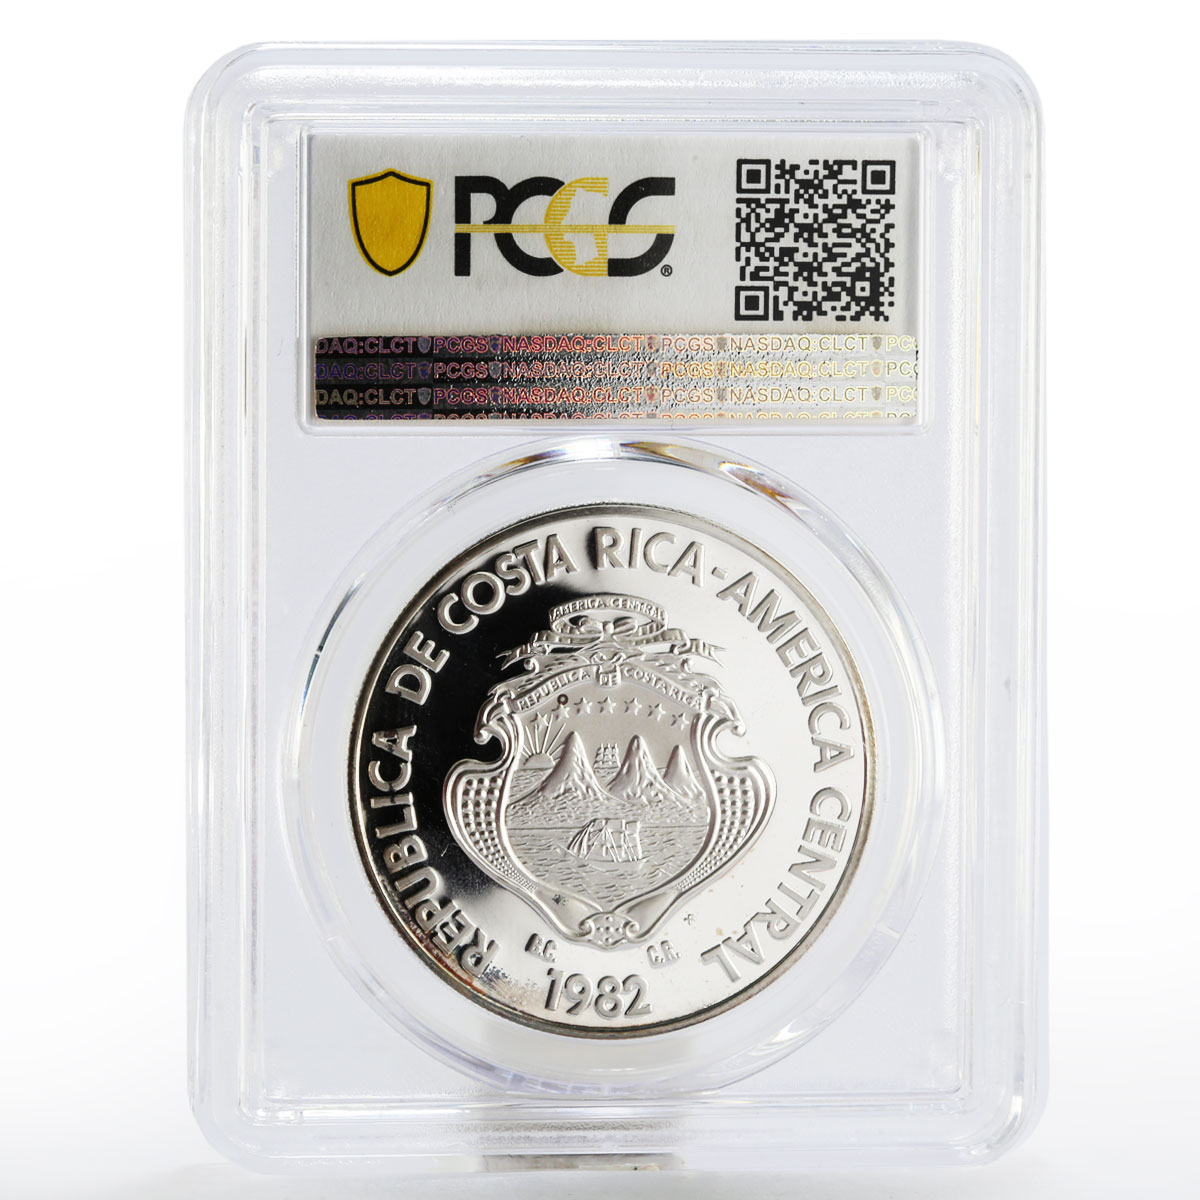 Costa Rica 250 colones Jaguar Head facing silver coin 1982